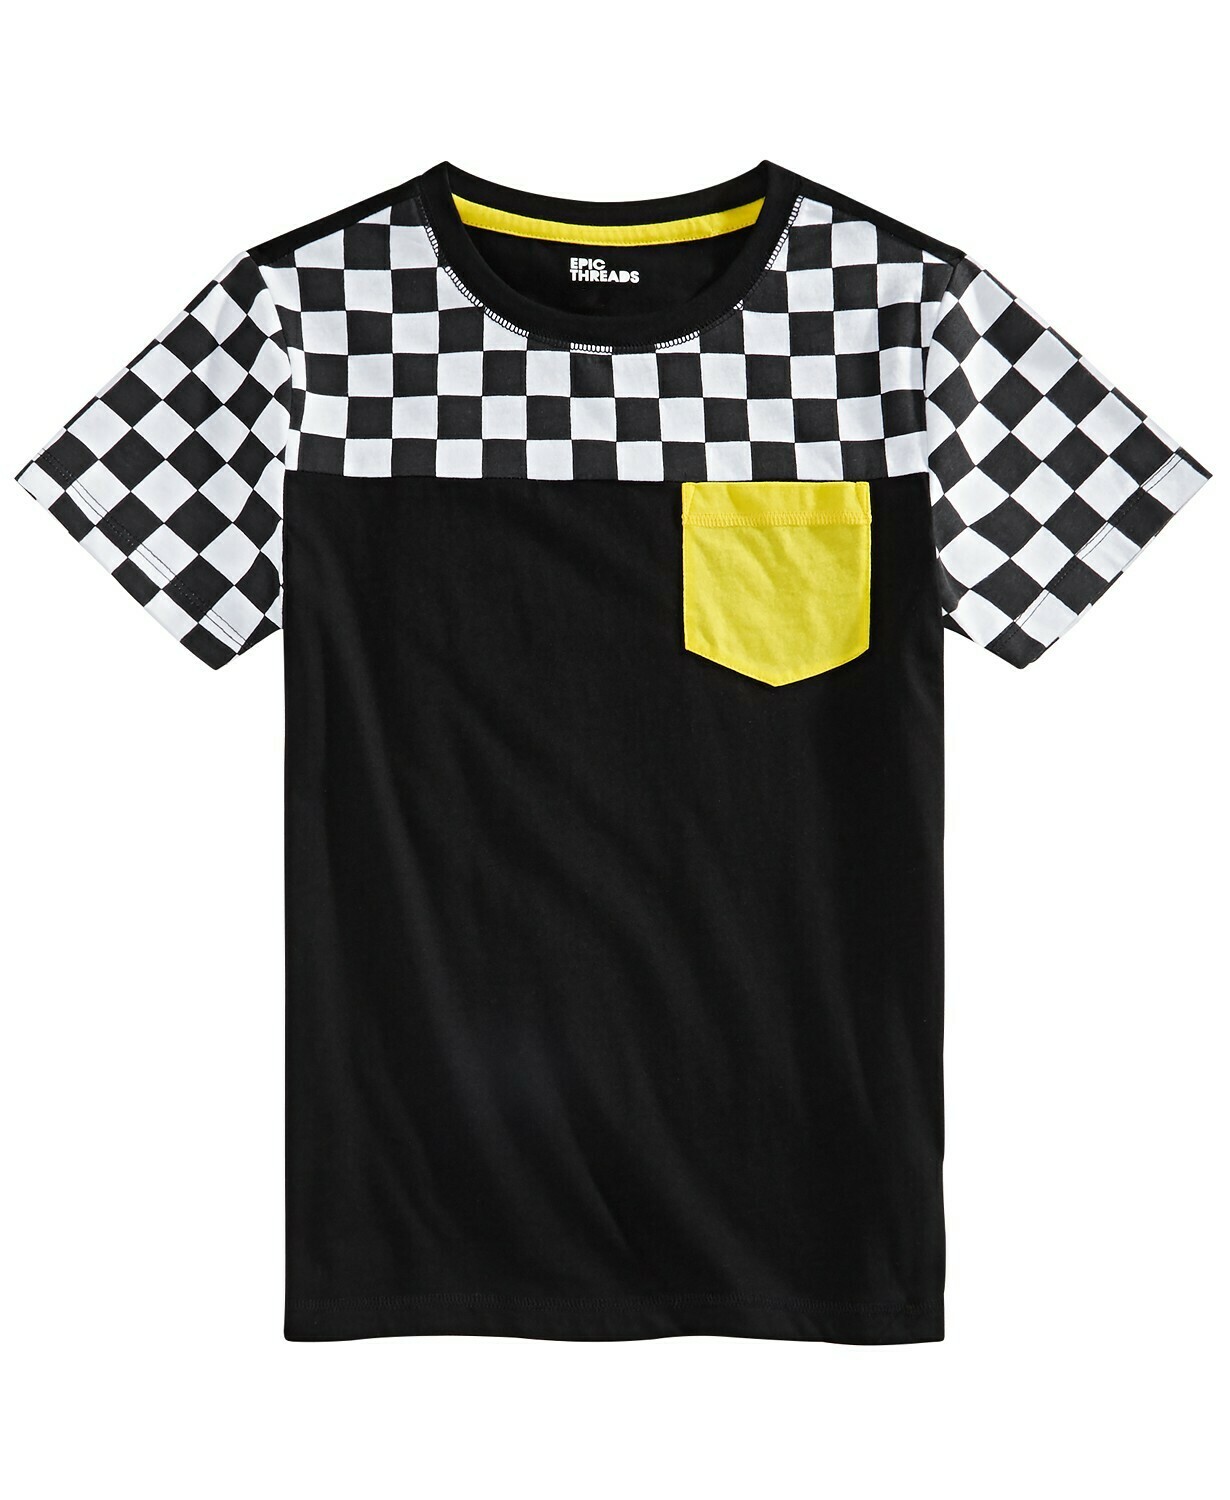 Epic Threads Big Boys Checkered-Print Colorblocked T-Shirt